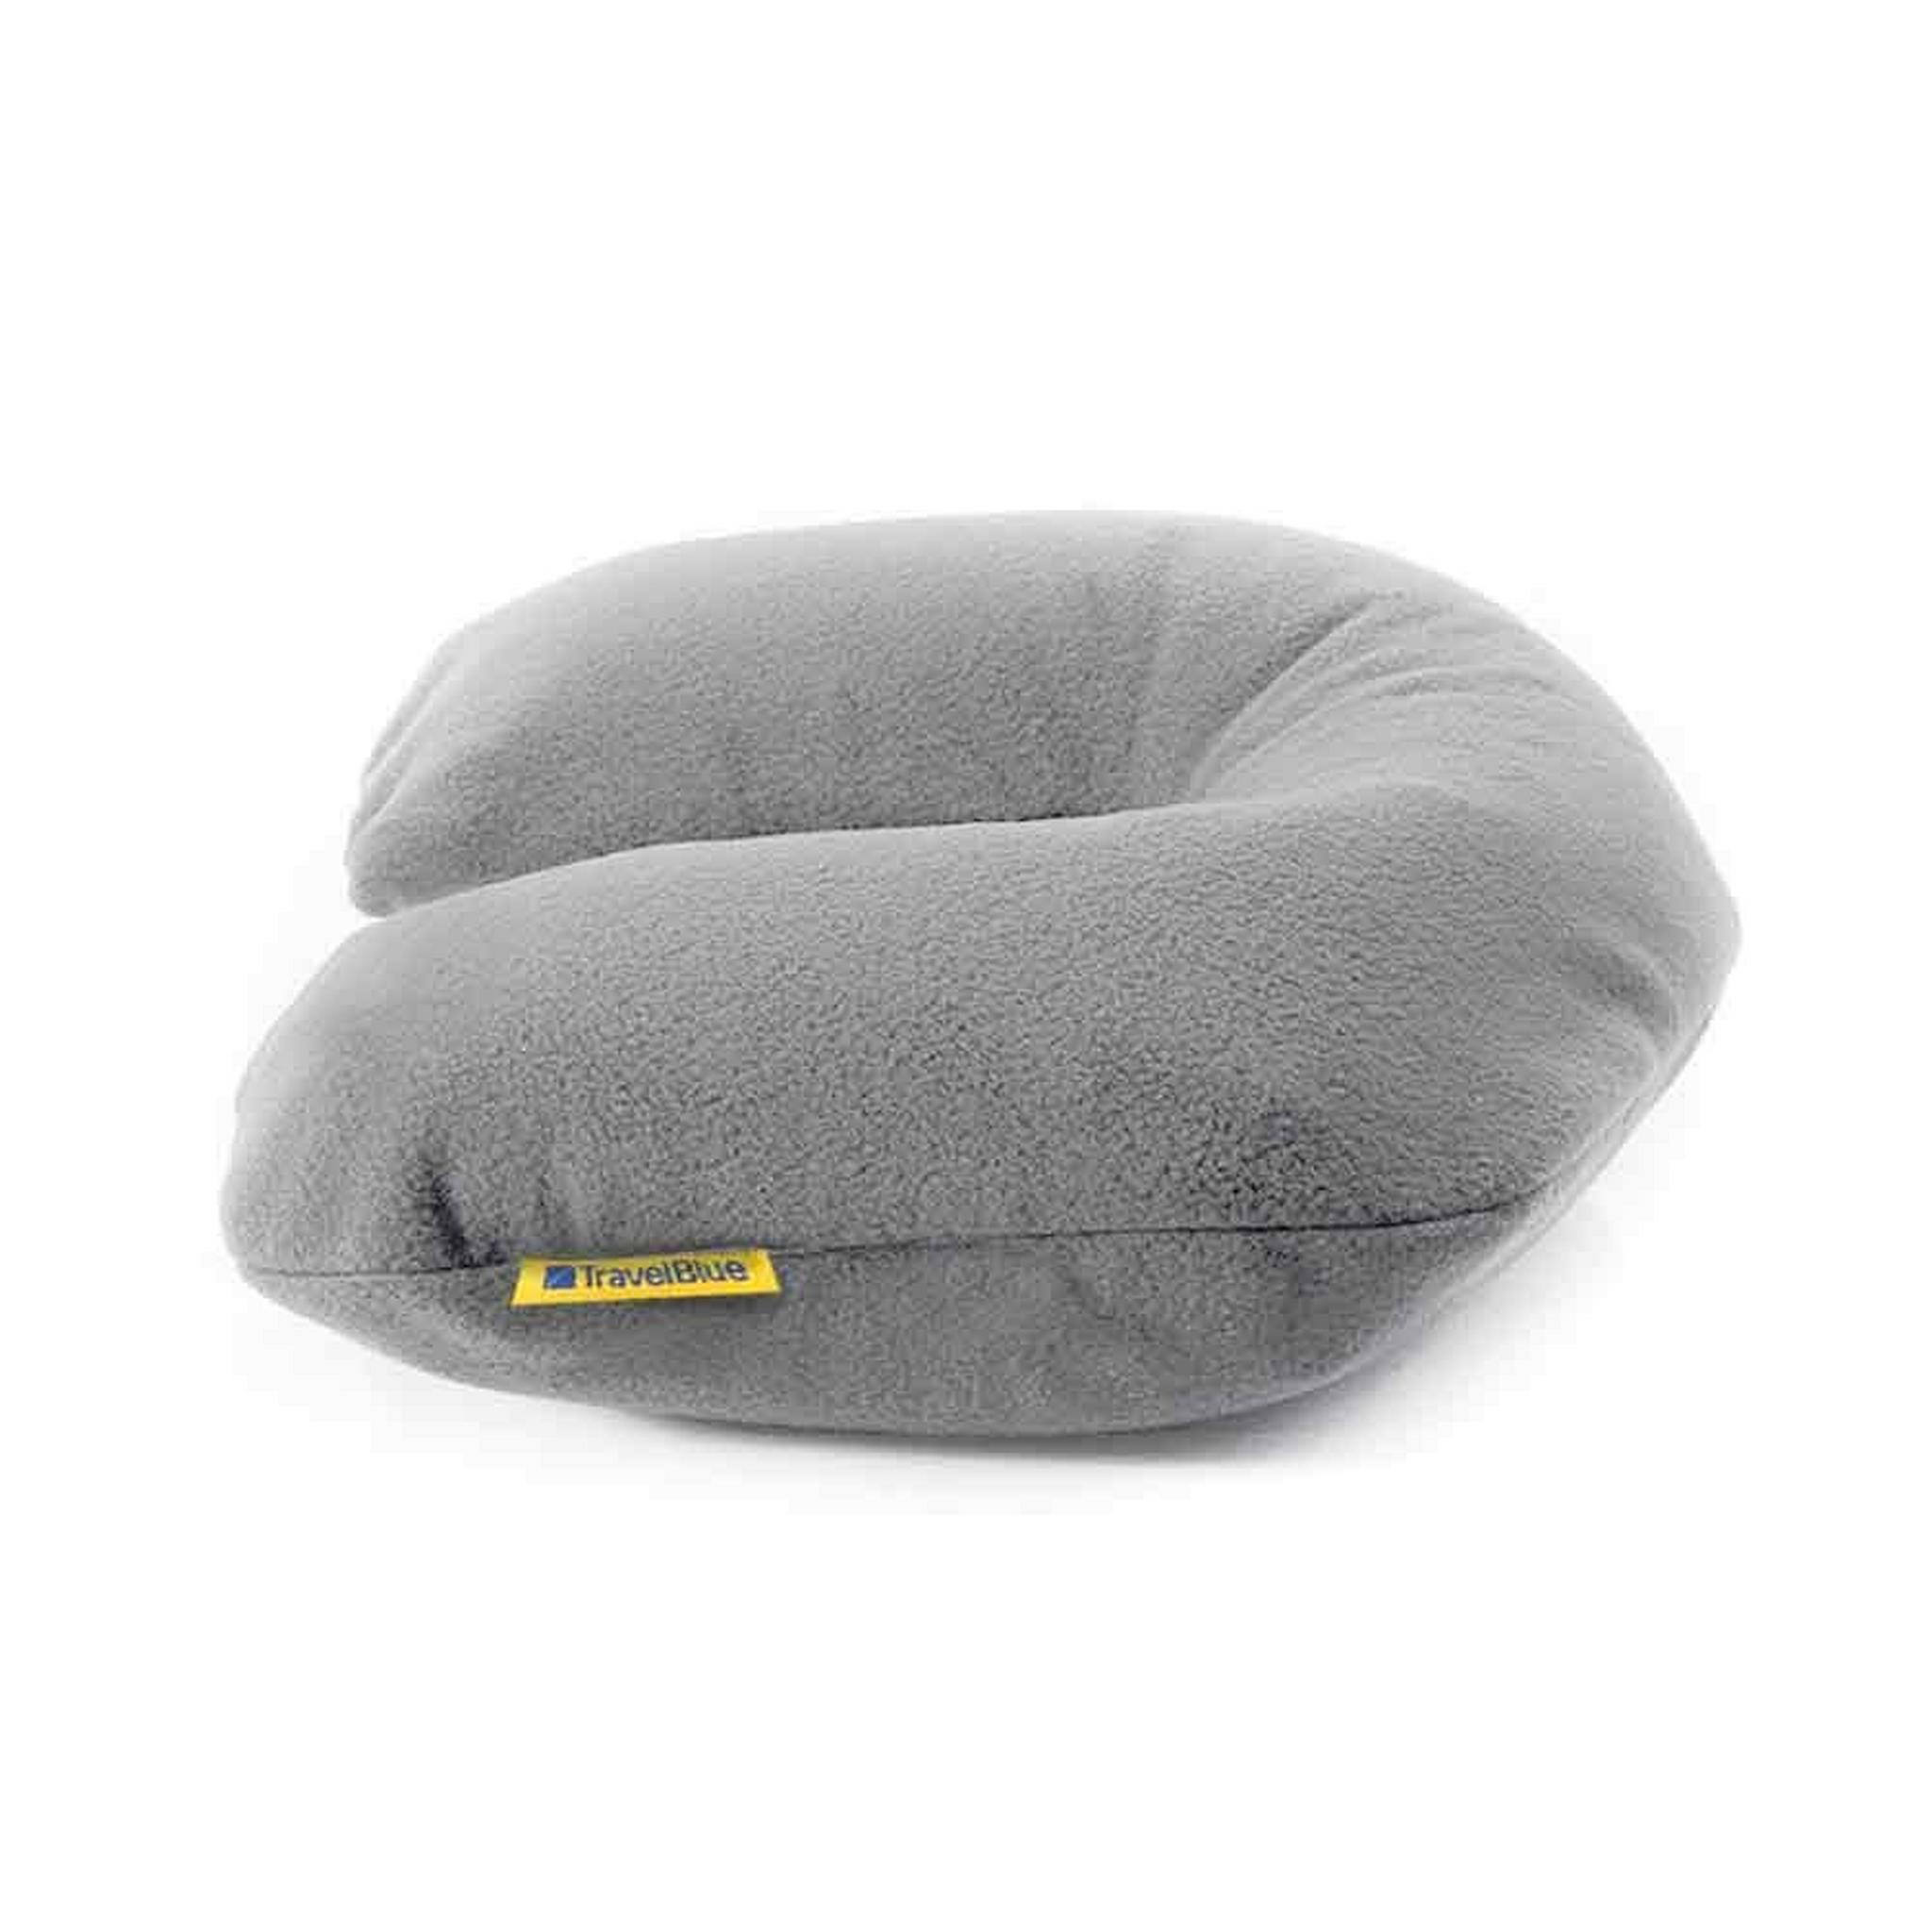 Travel Blue Fleecy Inflatable Travel Neck Pillow 221 - Grey